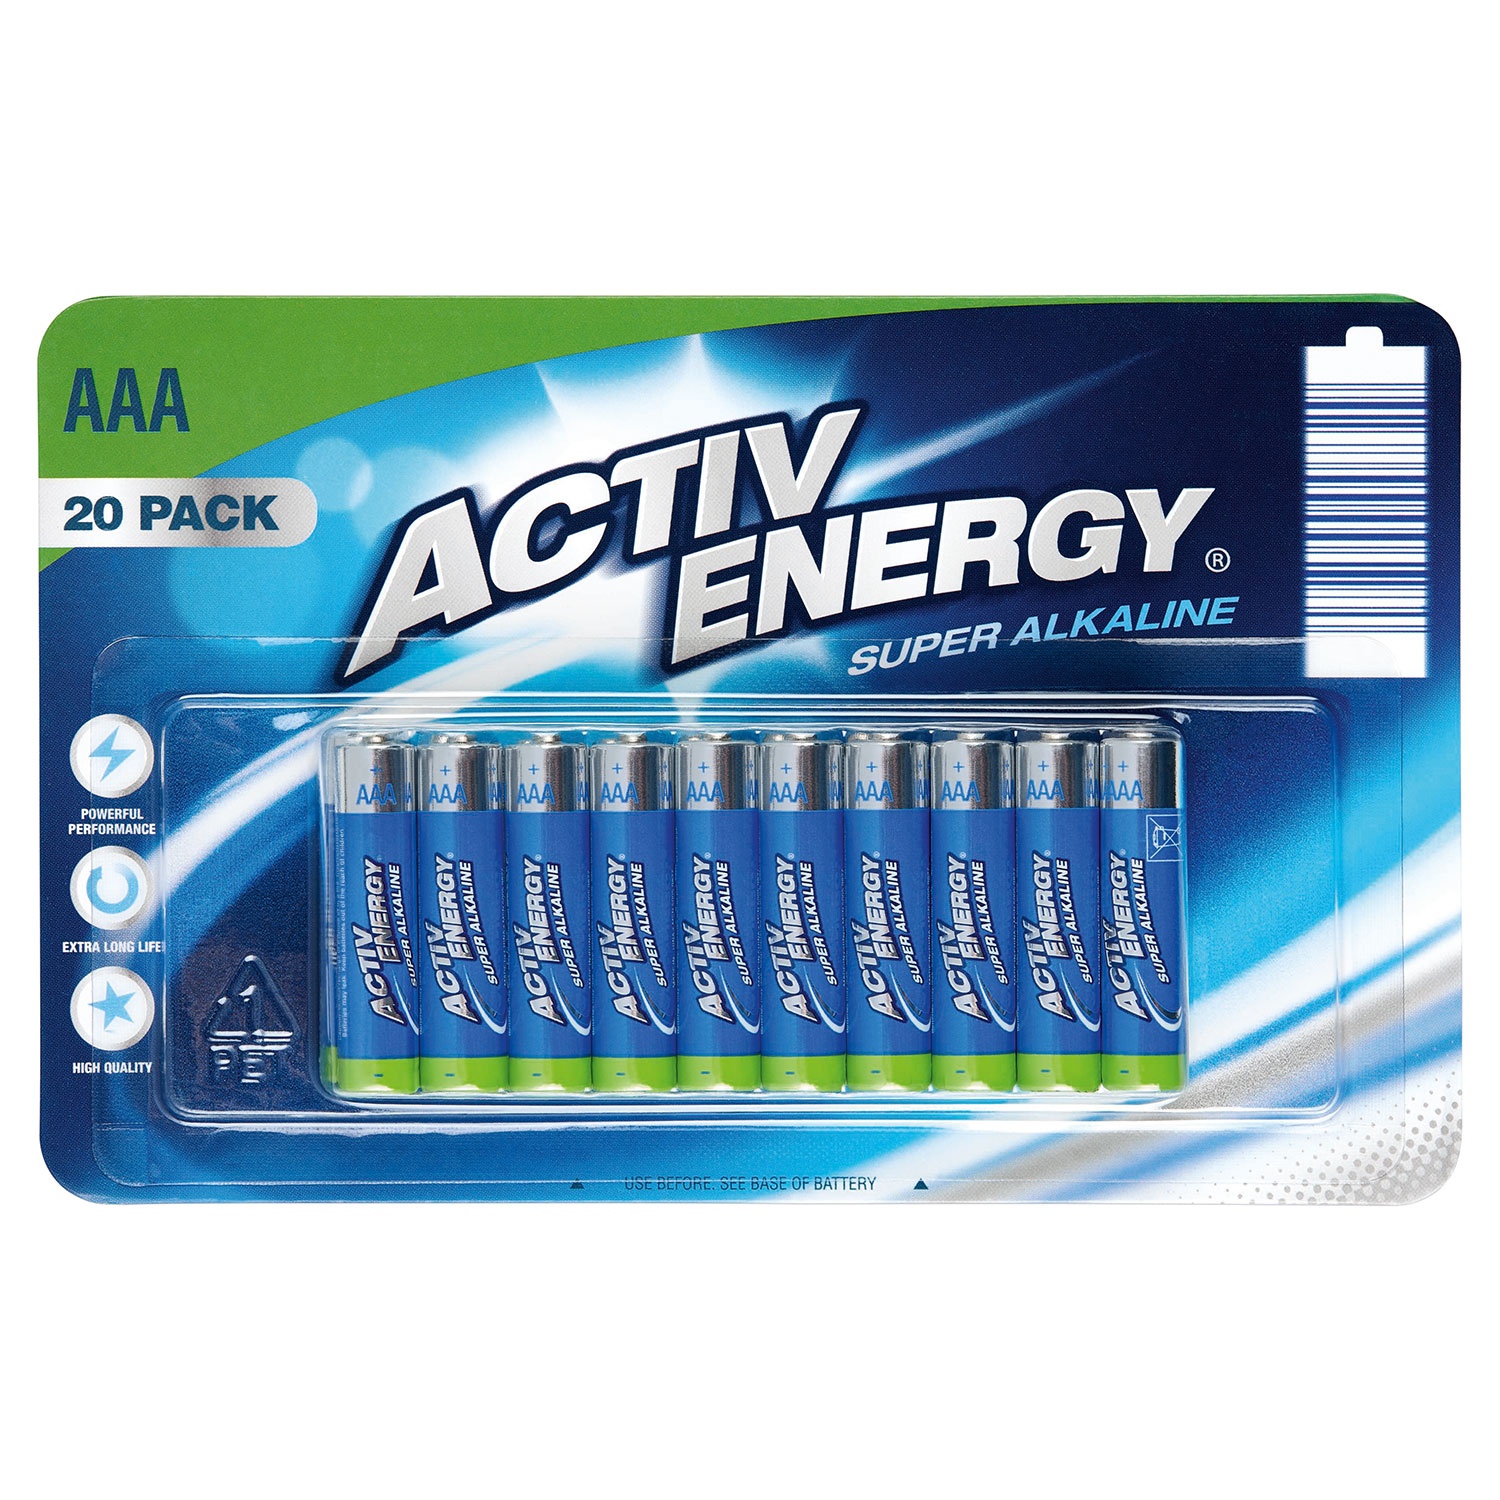 ACTIV ENERGY® Batterien, 20er-Packung